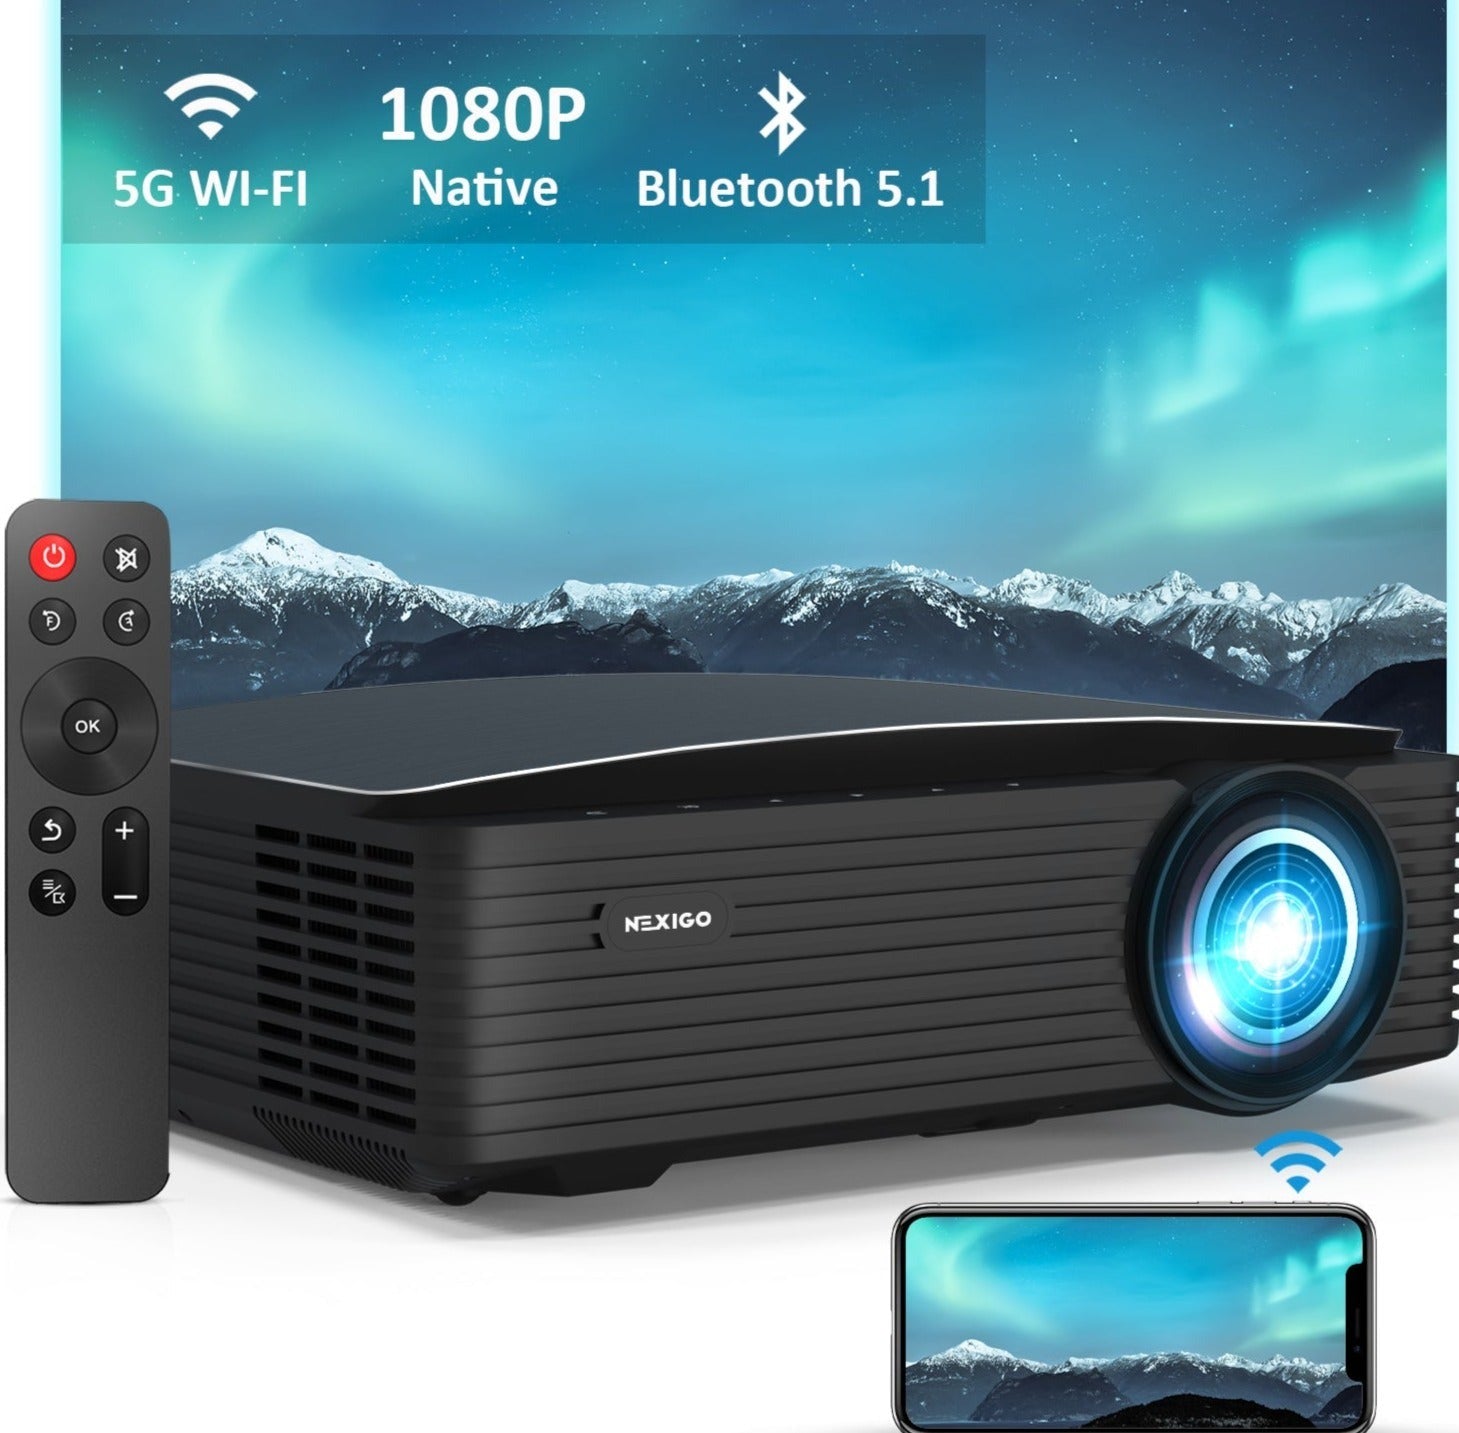 NexiGo home projector features a 1920 x 1080 native resolution. Comes with a remote control.